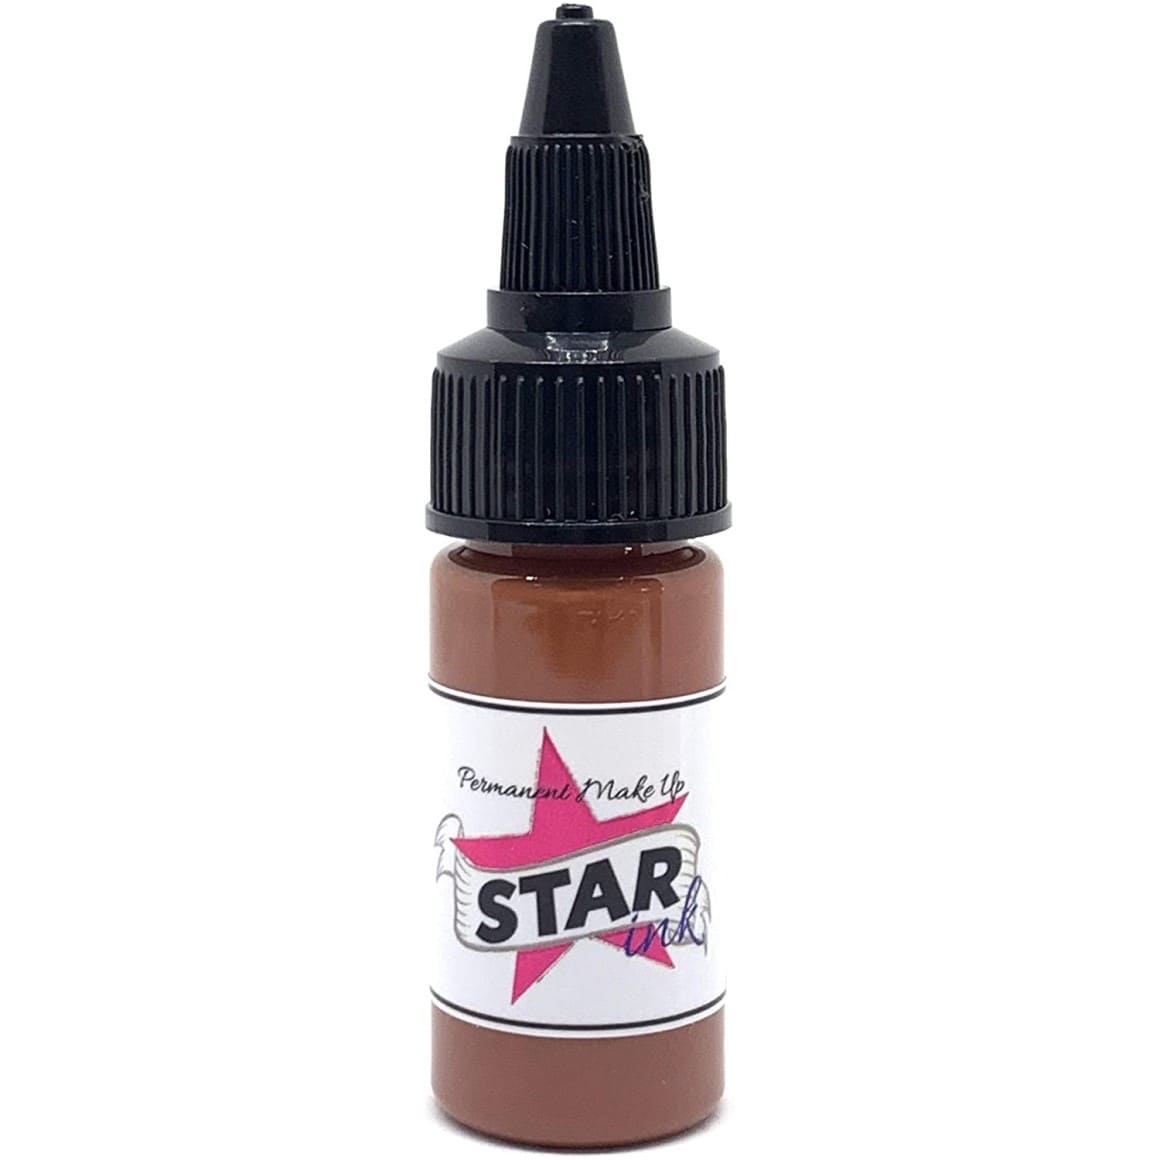 Star Inks True Gold Pigment-Pigments-Starinks-FYT PMU Supplies